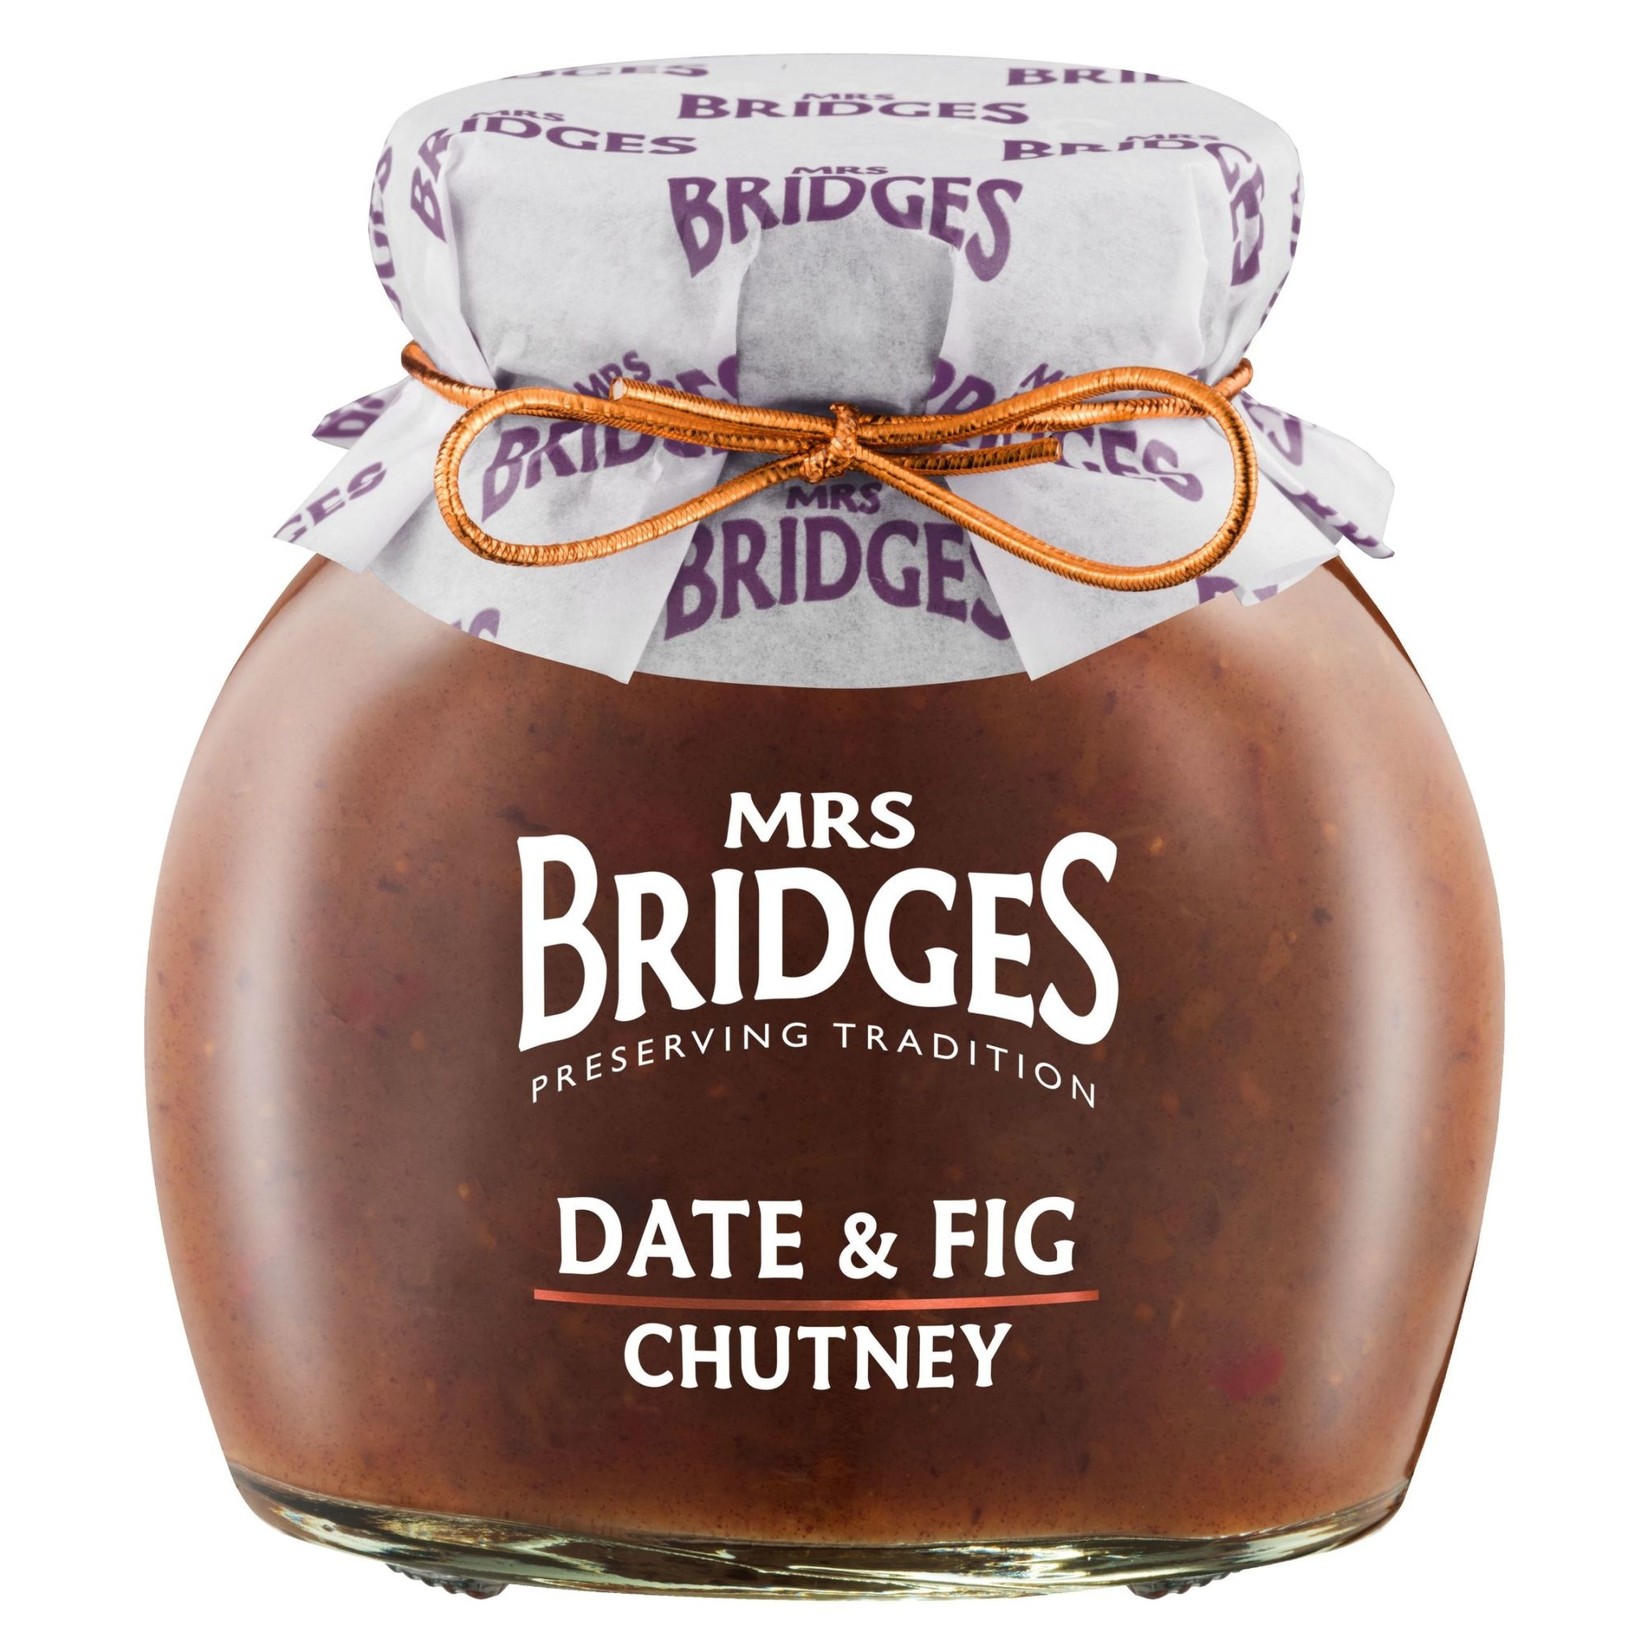 MRS BRIDGES MRS BRIDGES Date & Fig Chutney 300g